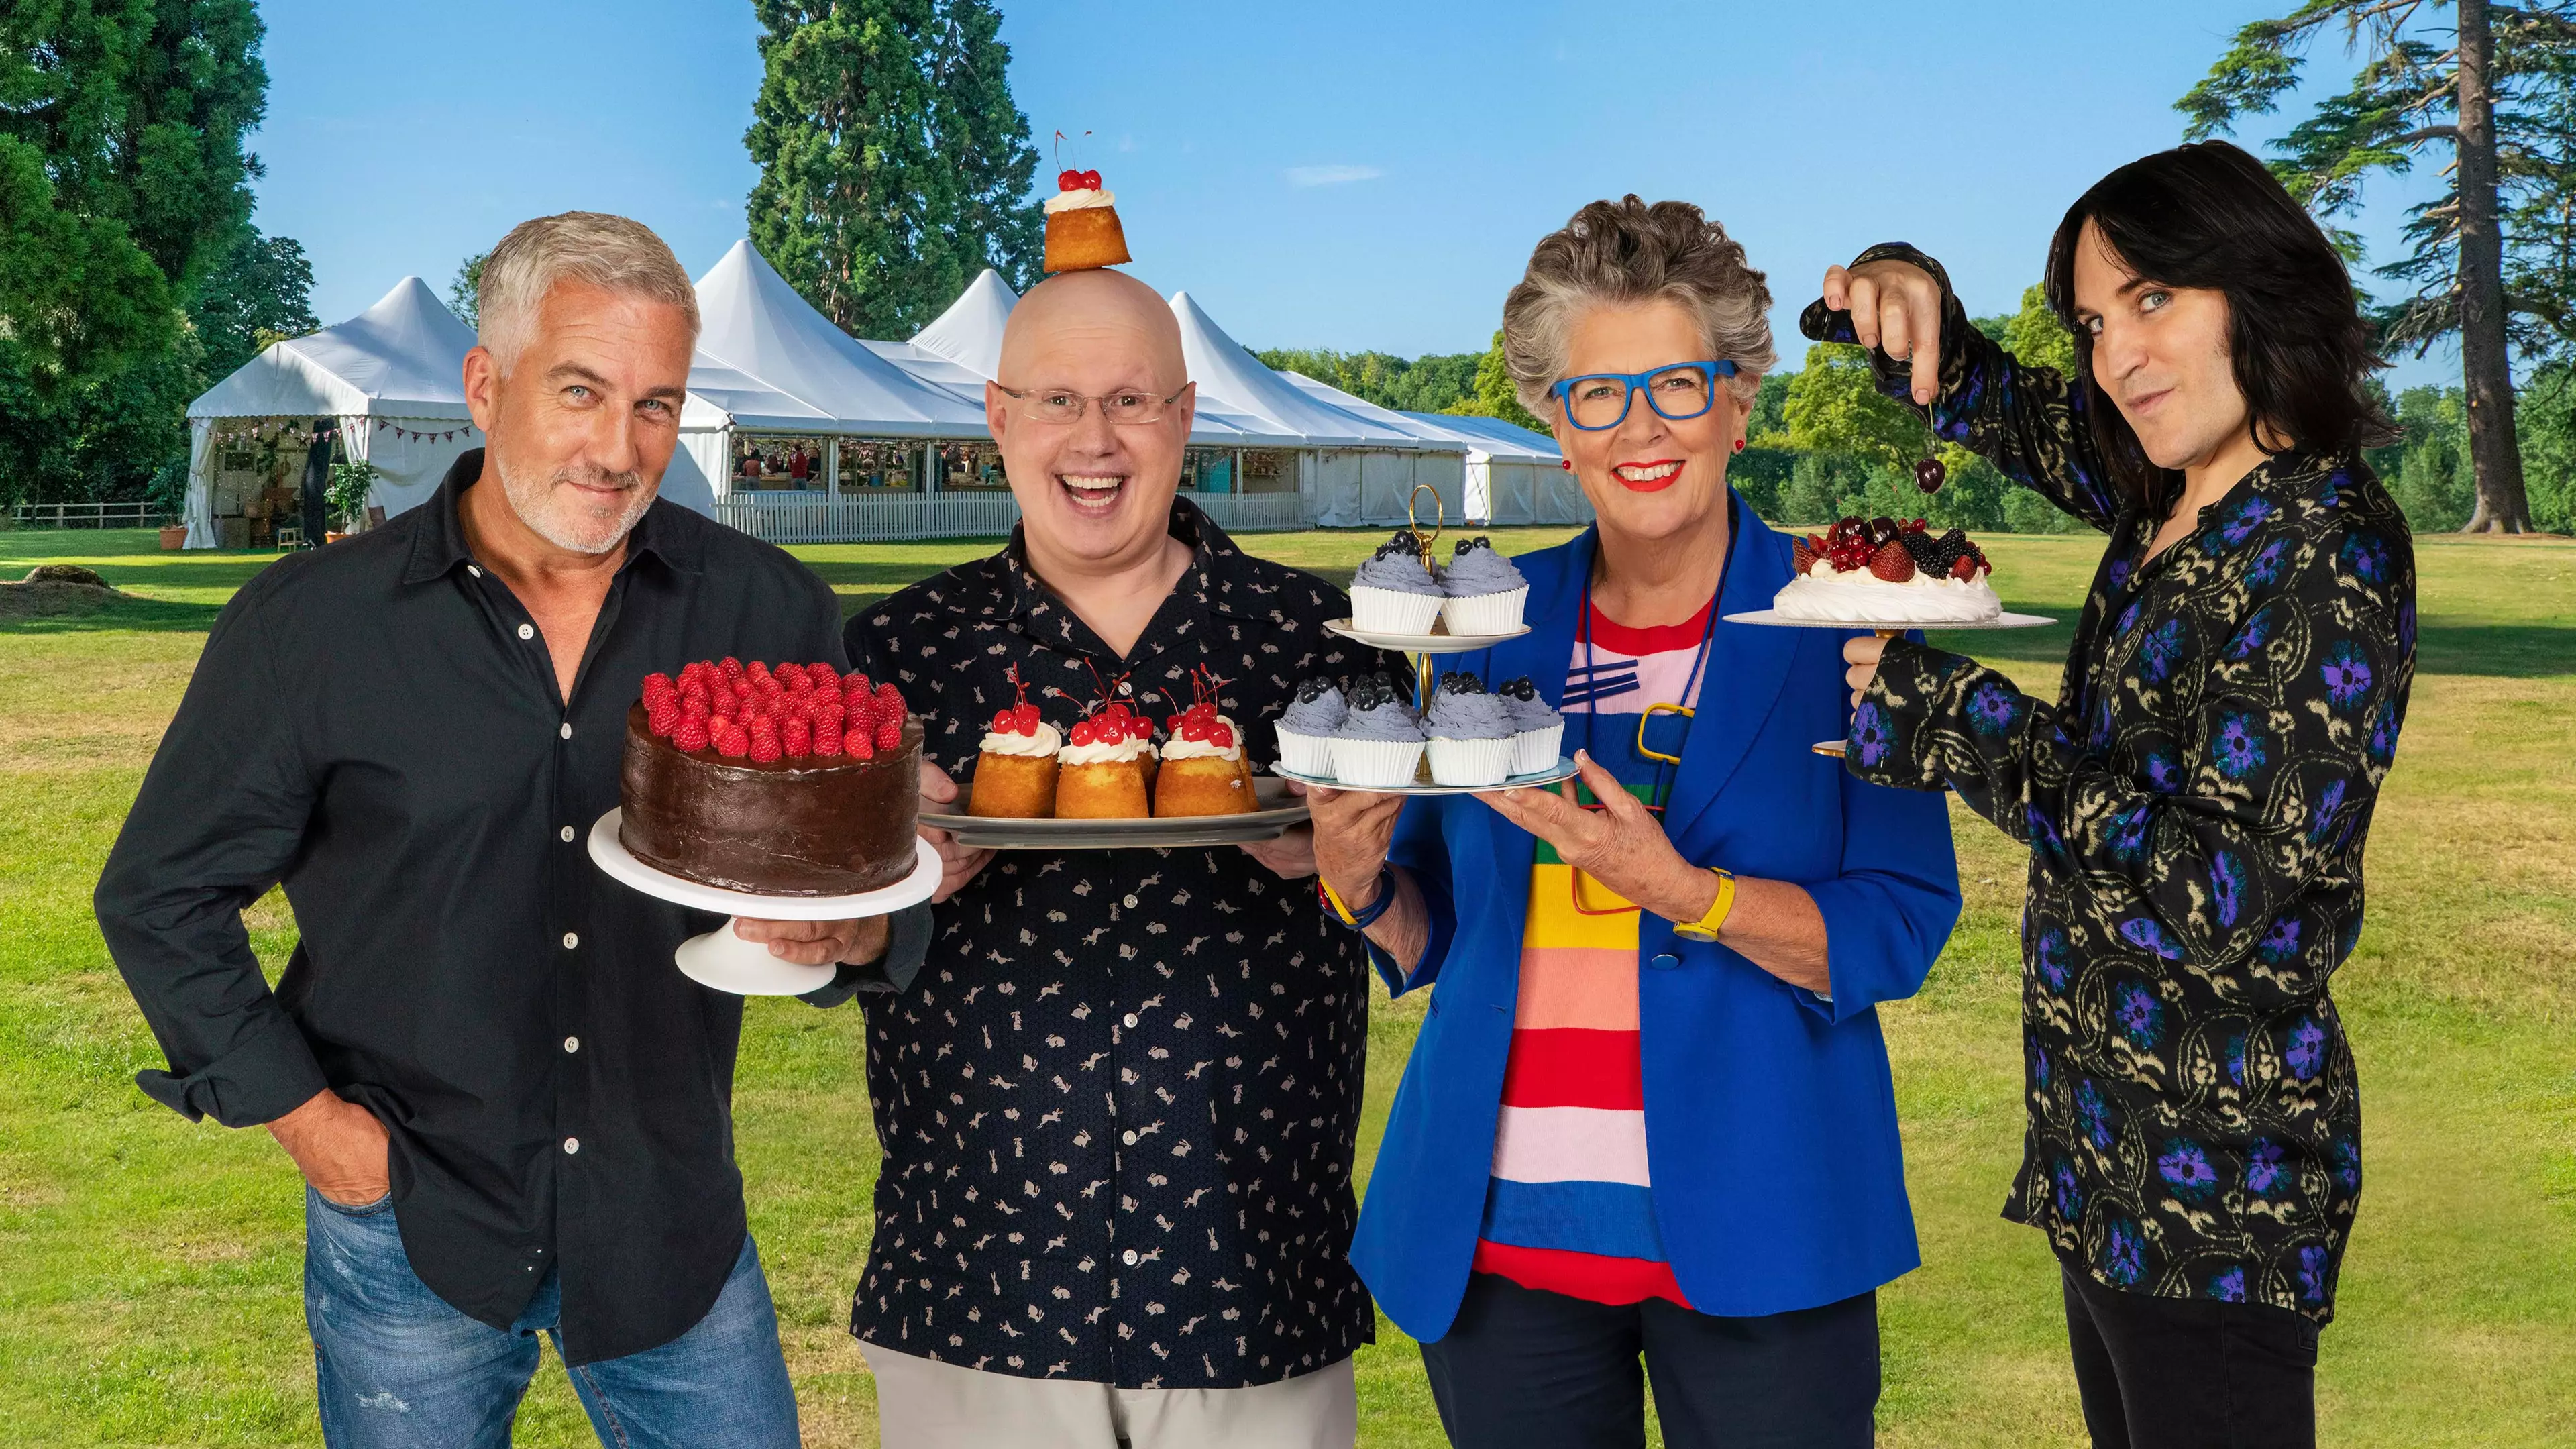 Meet The 'Great British Bake Off' 2020 Contestants